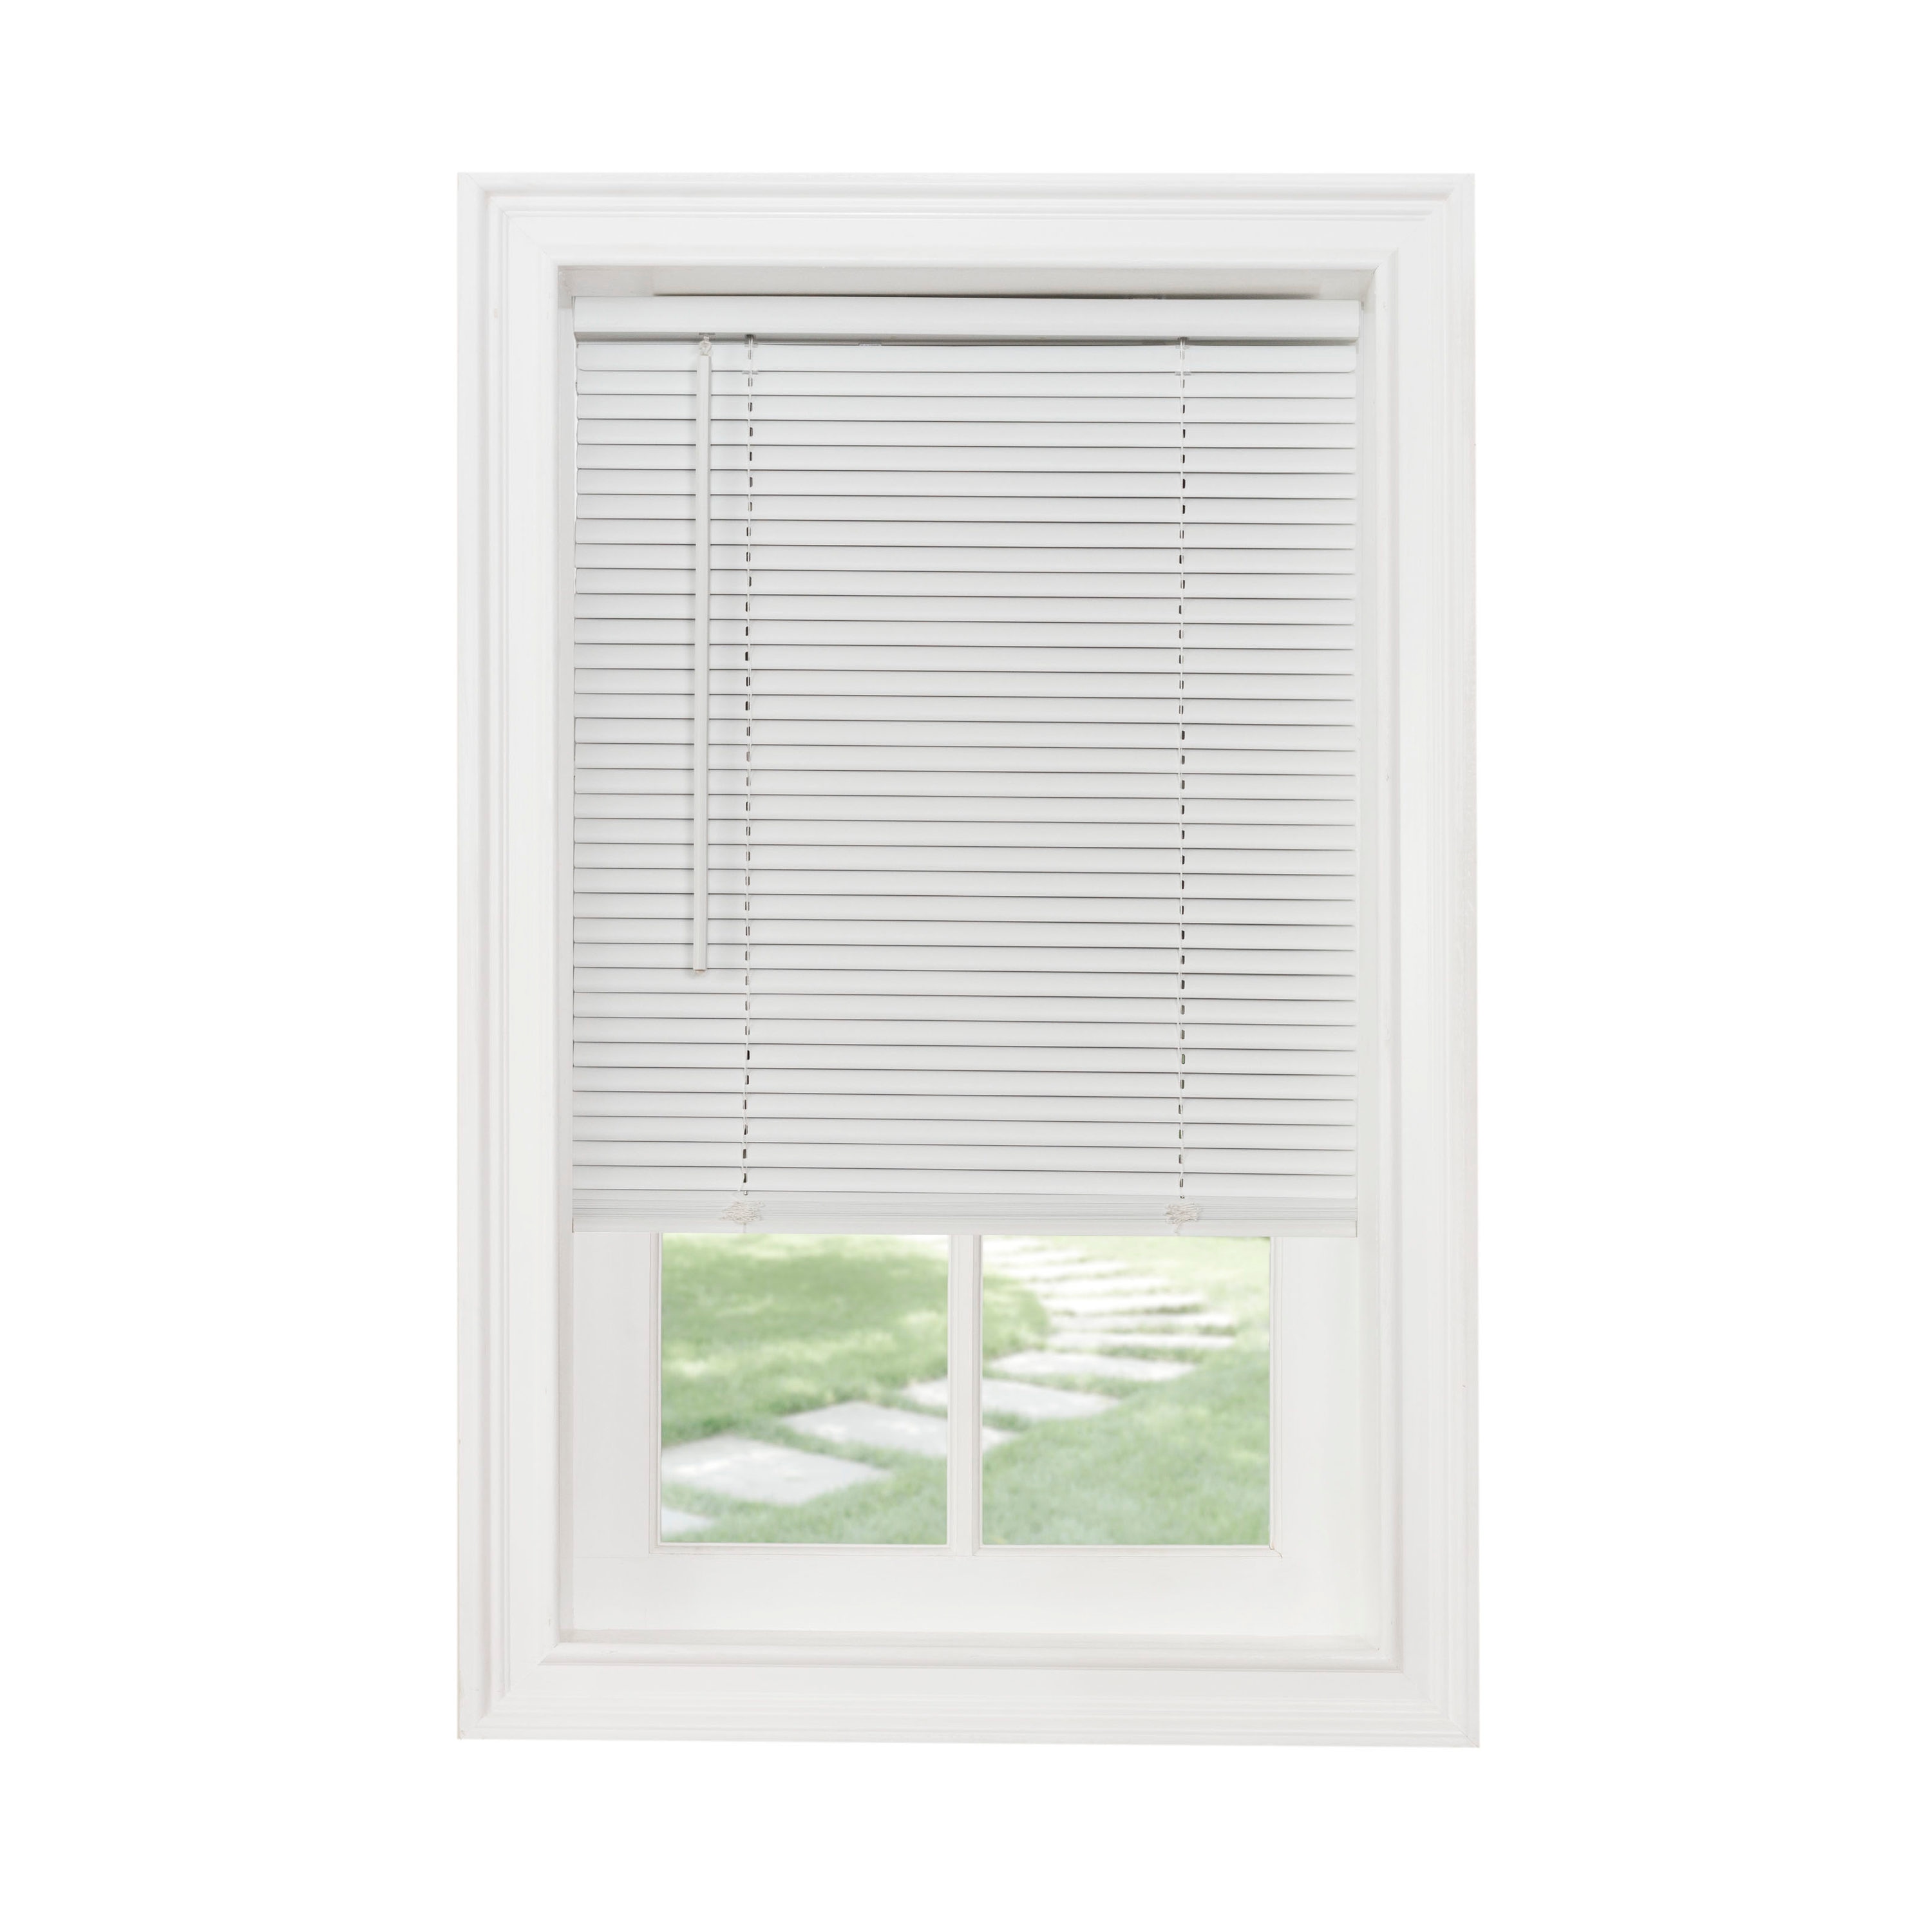  Aluminum Mini Blinds，Mini Blind，Aluminum Venetian Blinds for  Window，Vinyl Blinds for Windows， Mini Blinds for Windows，Horizontal Window  Blinds， for Windows and Home (Size : W200xH280cm/79x110in) : Home & Kitchen